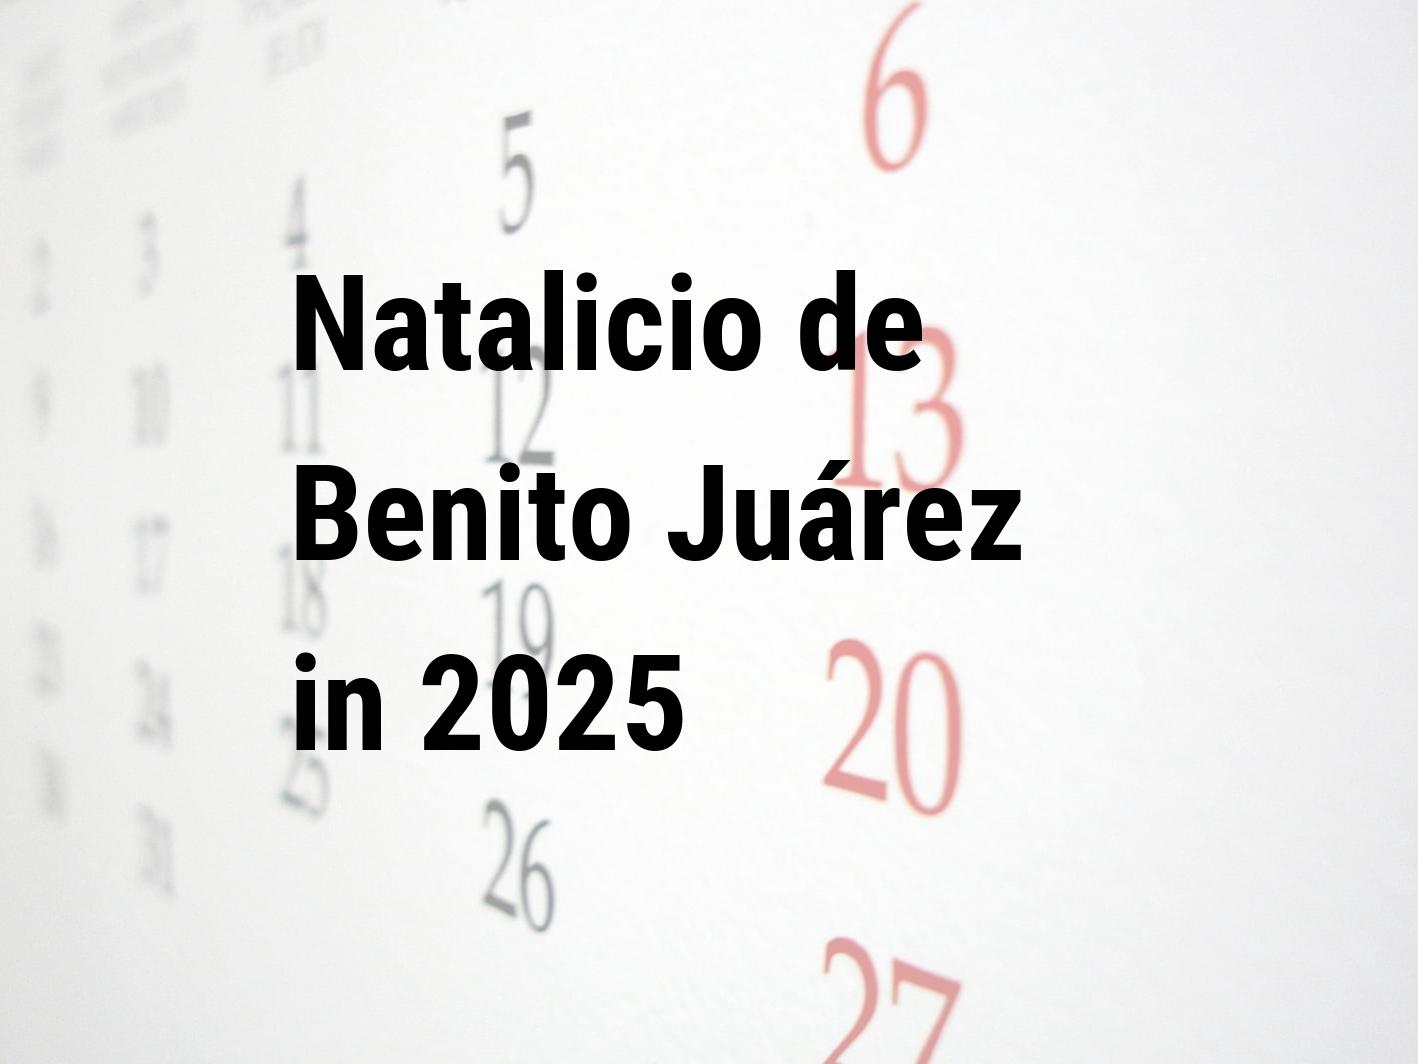 natalicio-de-benito-ju-rez-2025-calendar-center